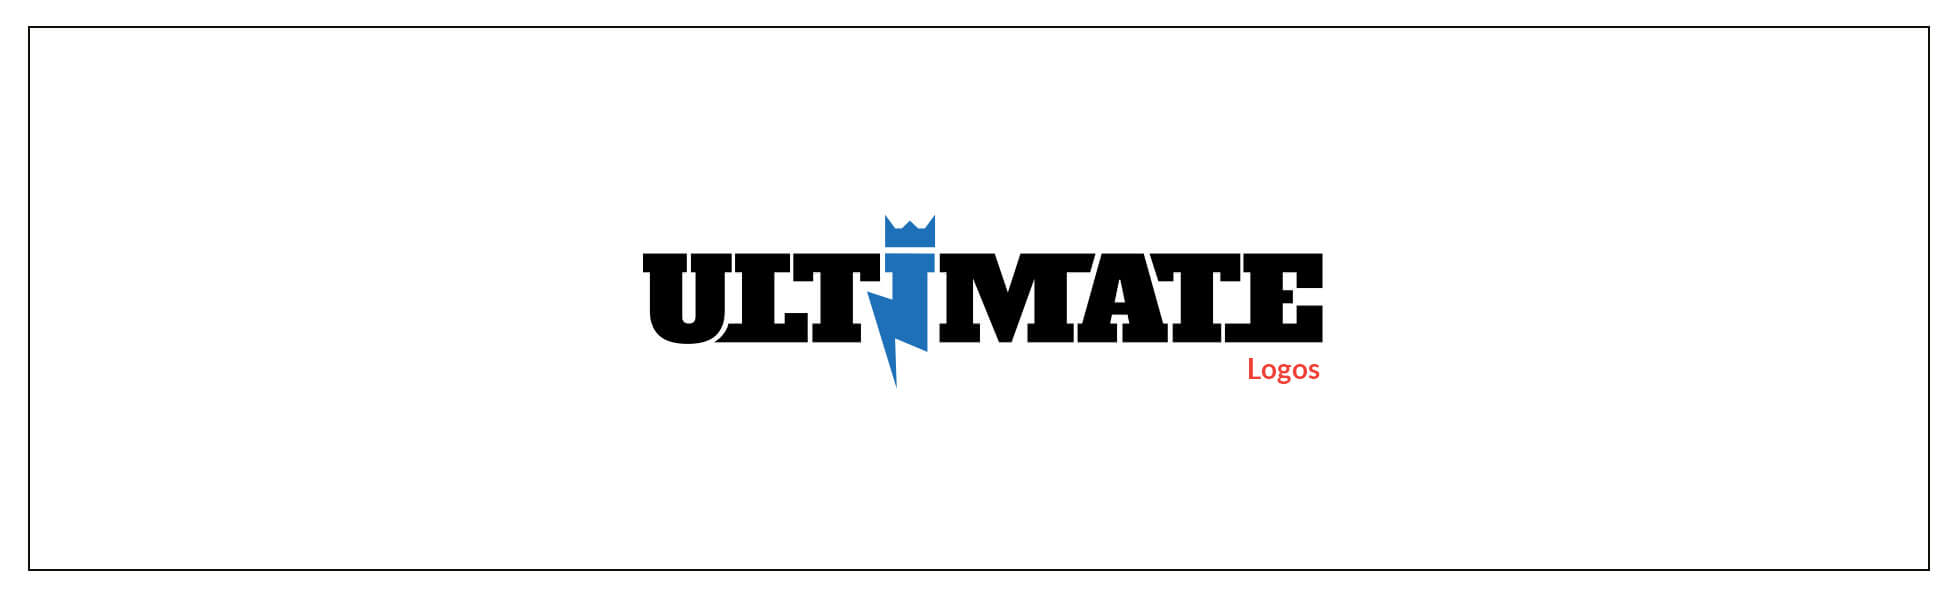 logo design muenchen corporated design brand t ultimatelogos